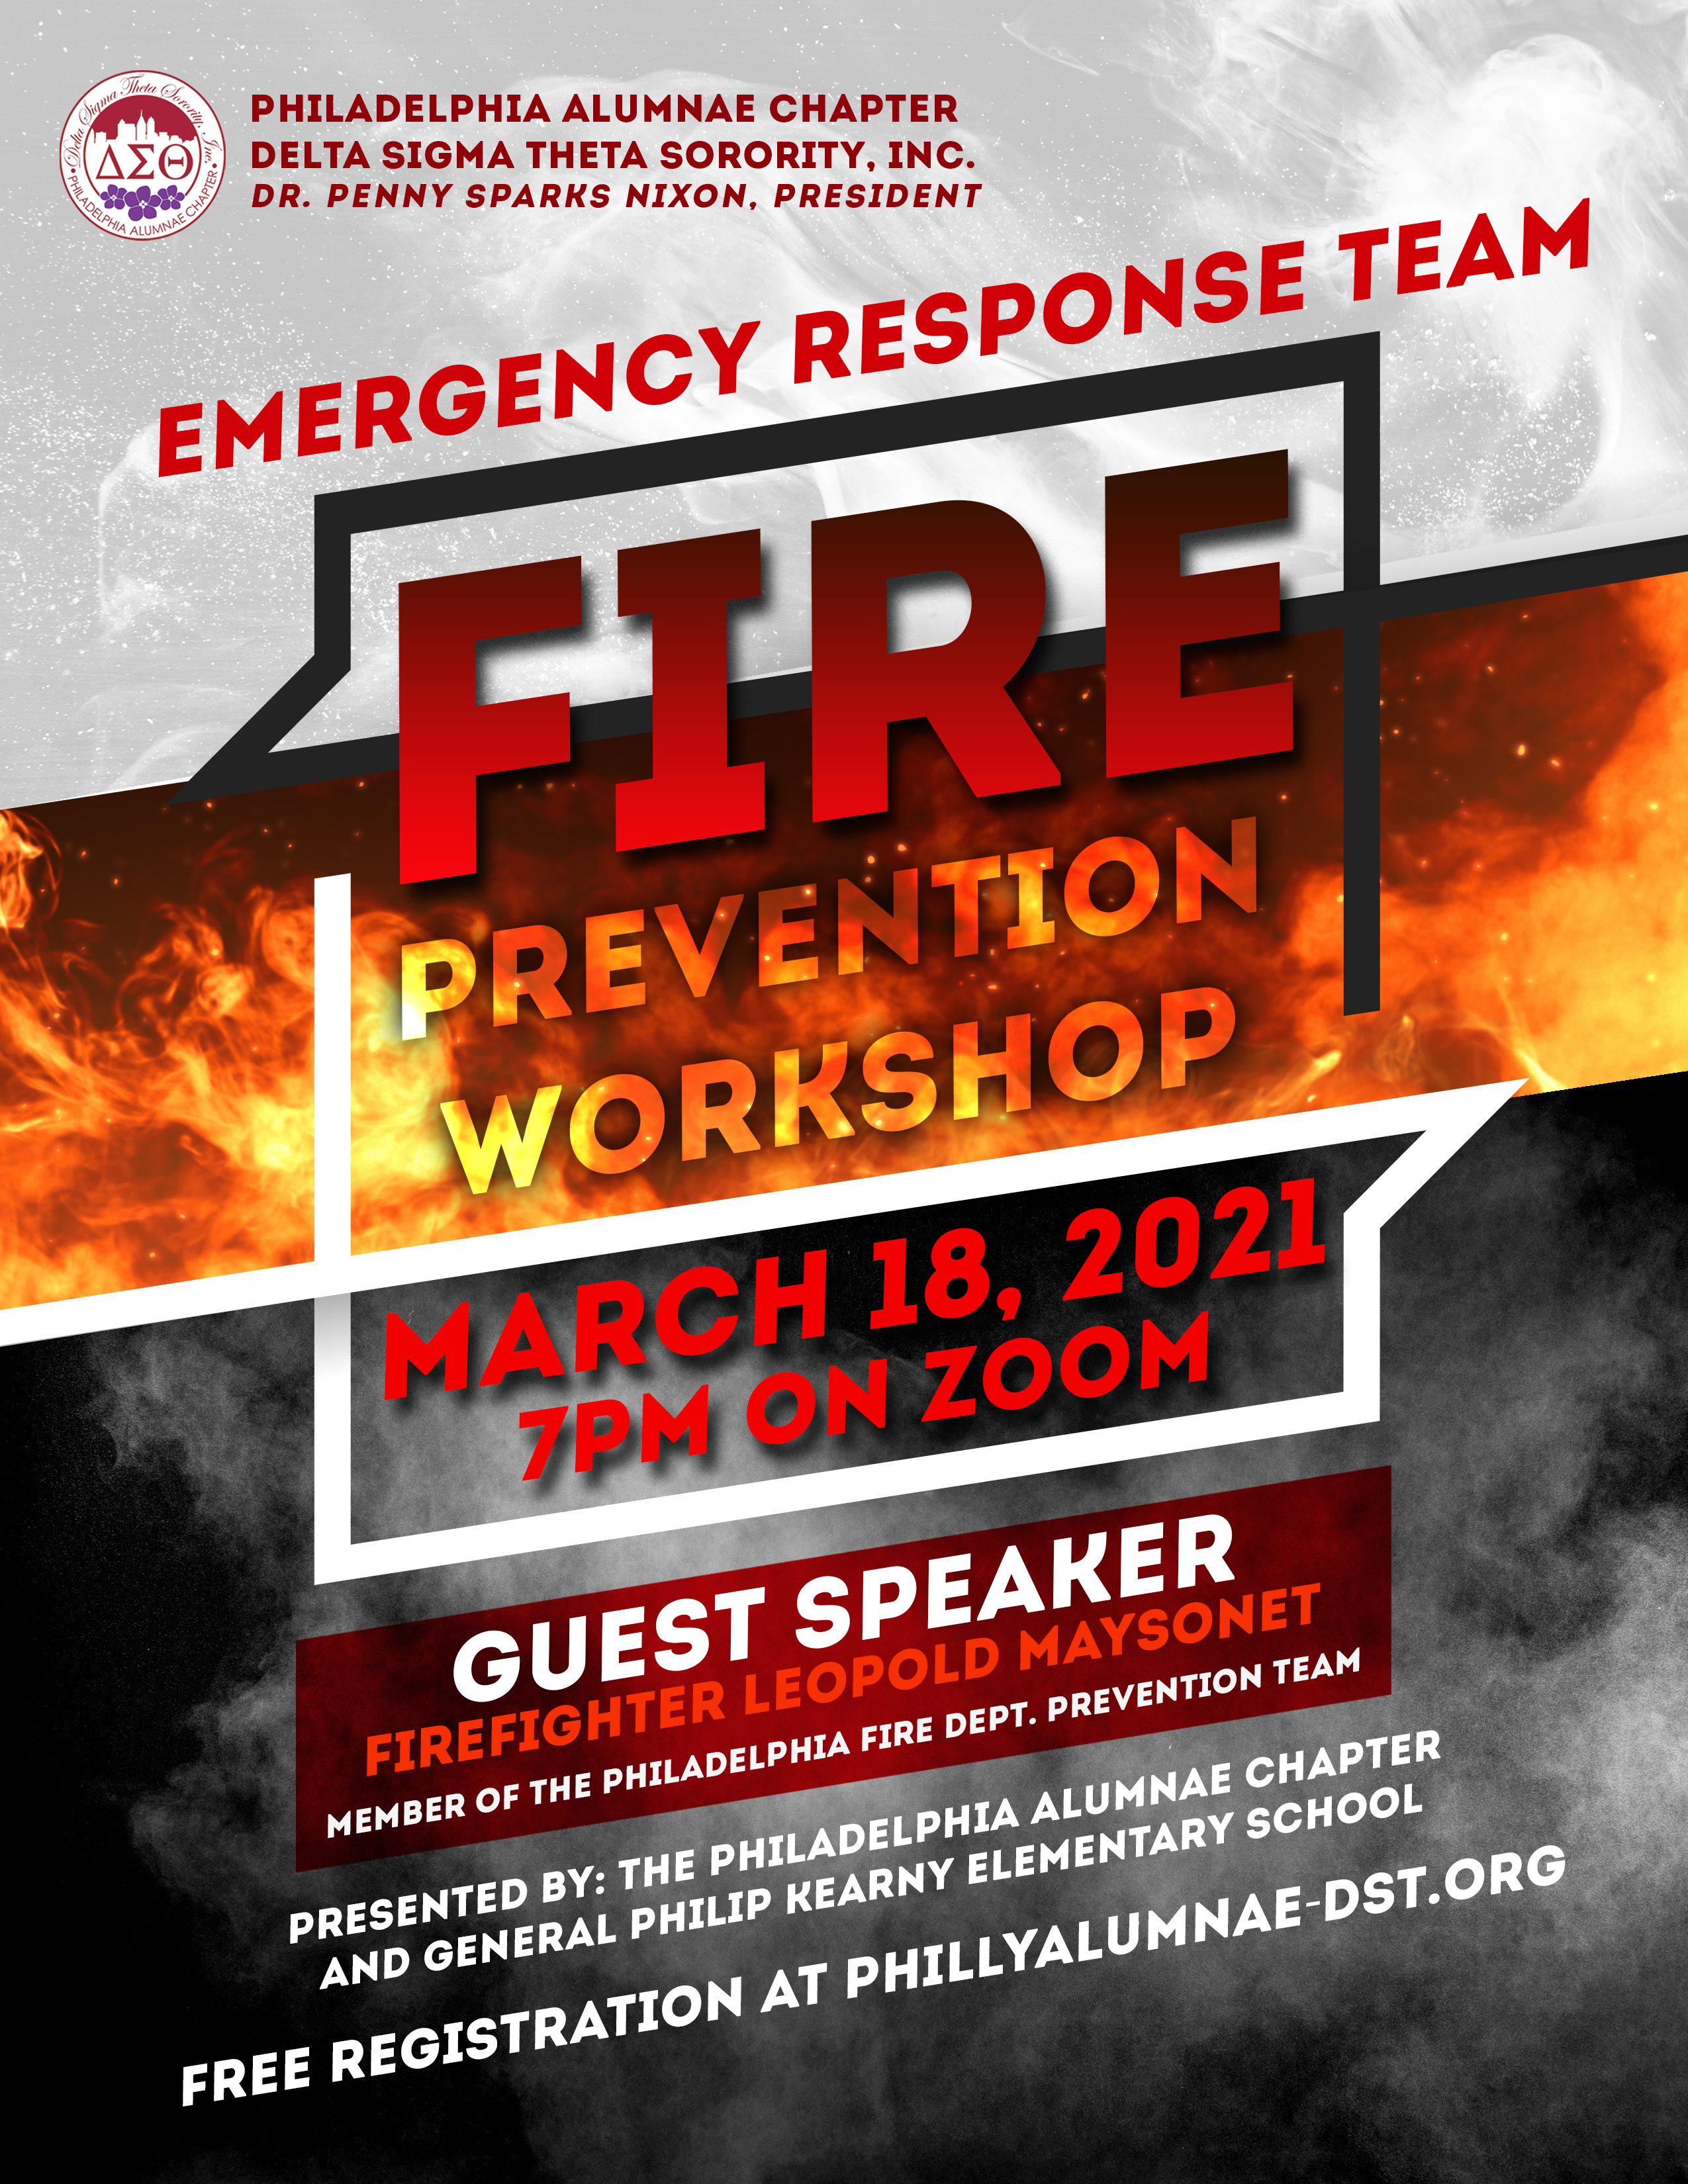 Emergency Response Team’s Fire Prevention Workshop